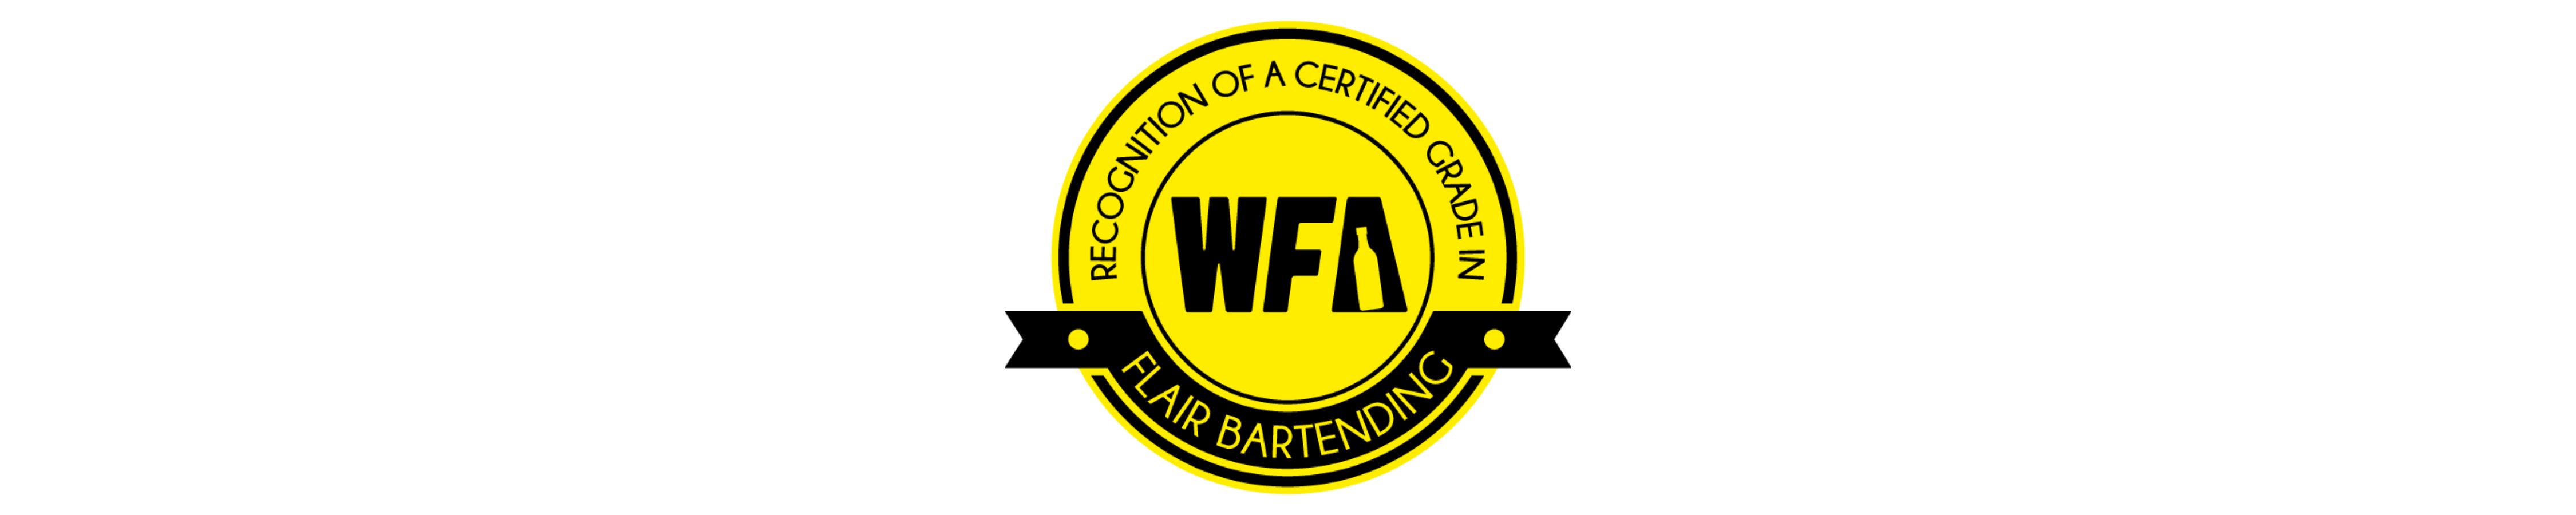 WFA International Bartending Course